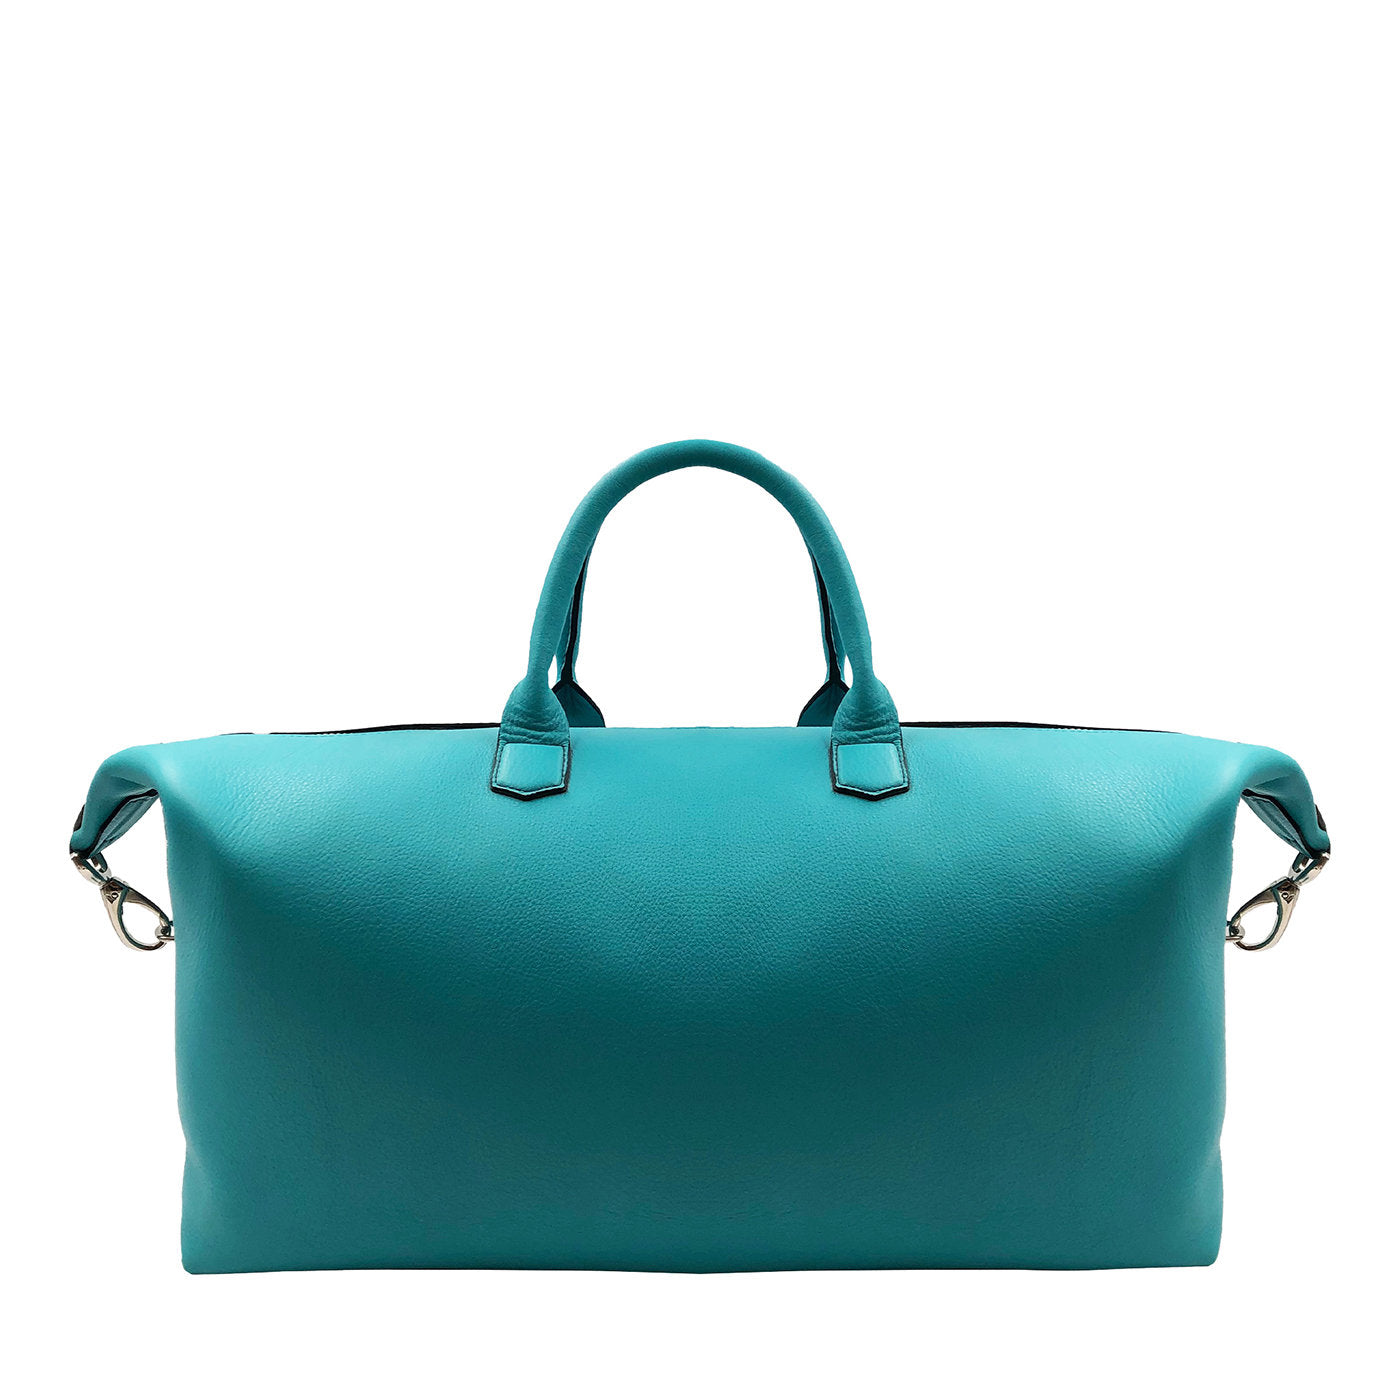 Turquoise Weekender Bag - Main view